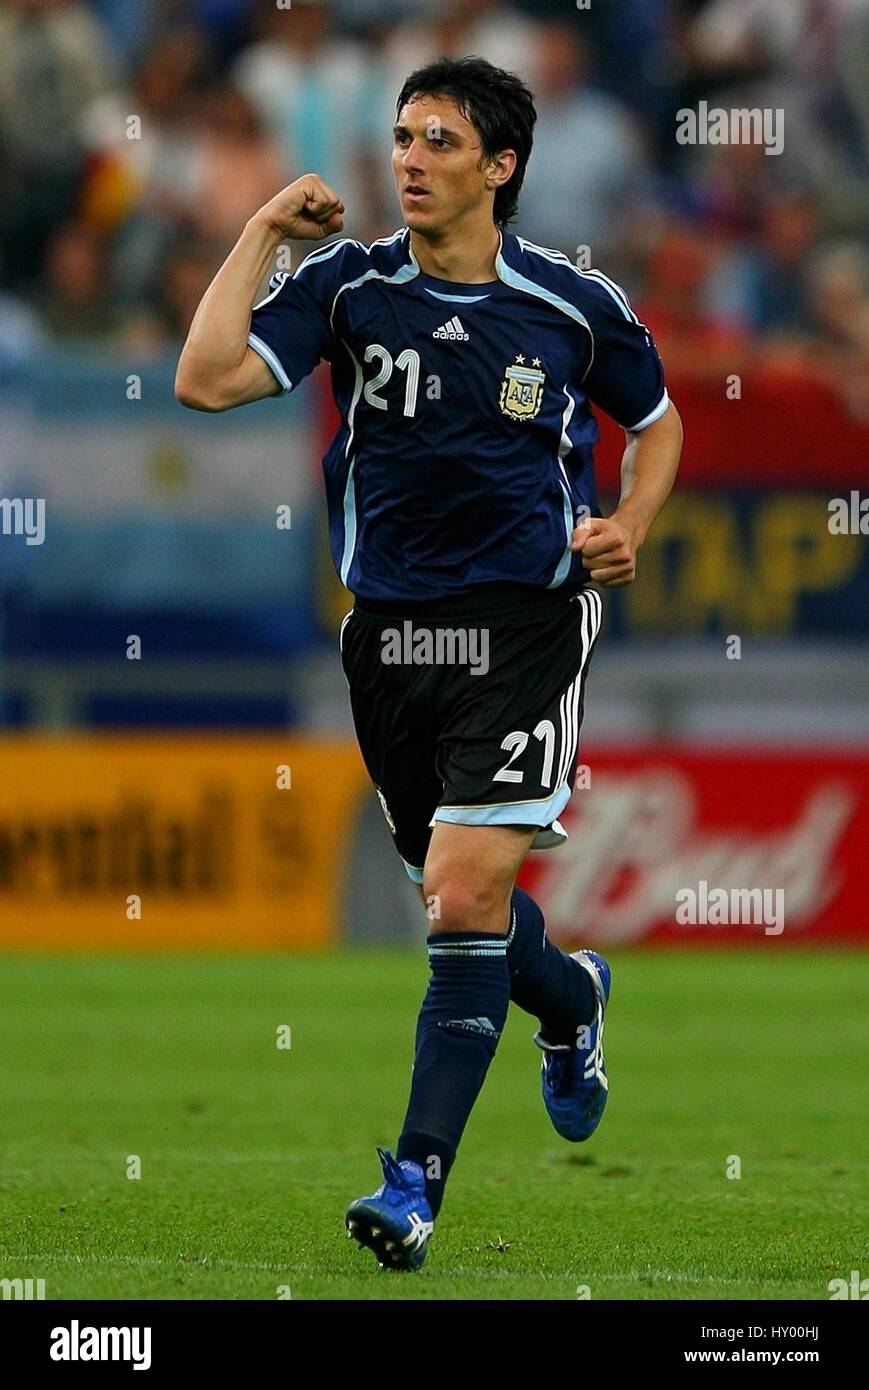 NICOLAS BURDISSO ARGENTINA & INTER MILAN WORLD CUP GELSENKIRCHEN GERMANY 16  June 2006 Stock Photo - Alamy